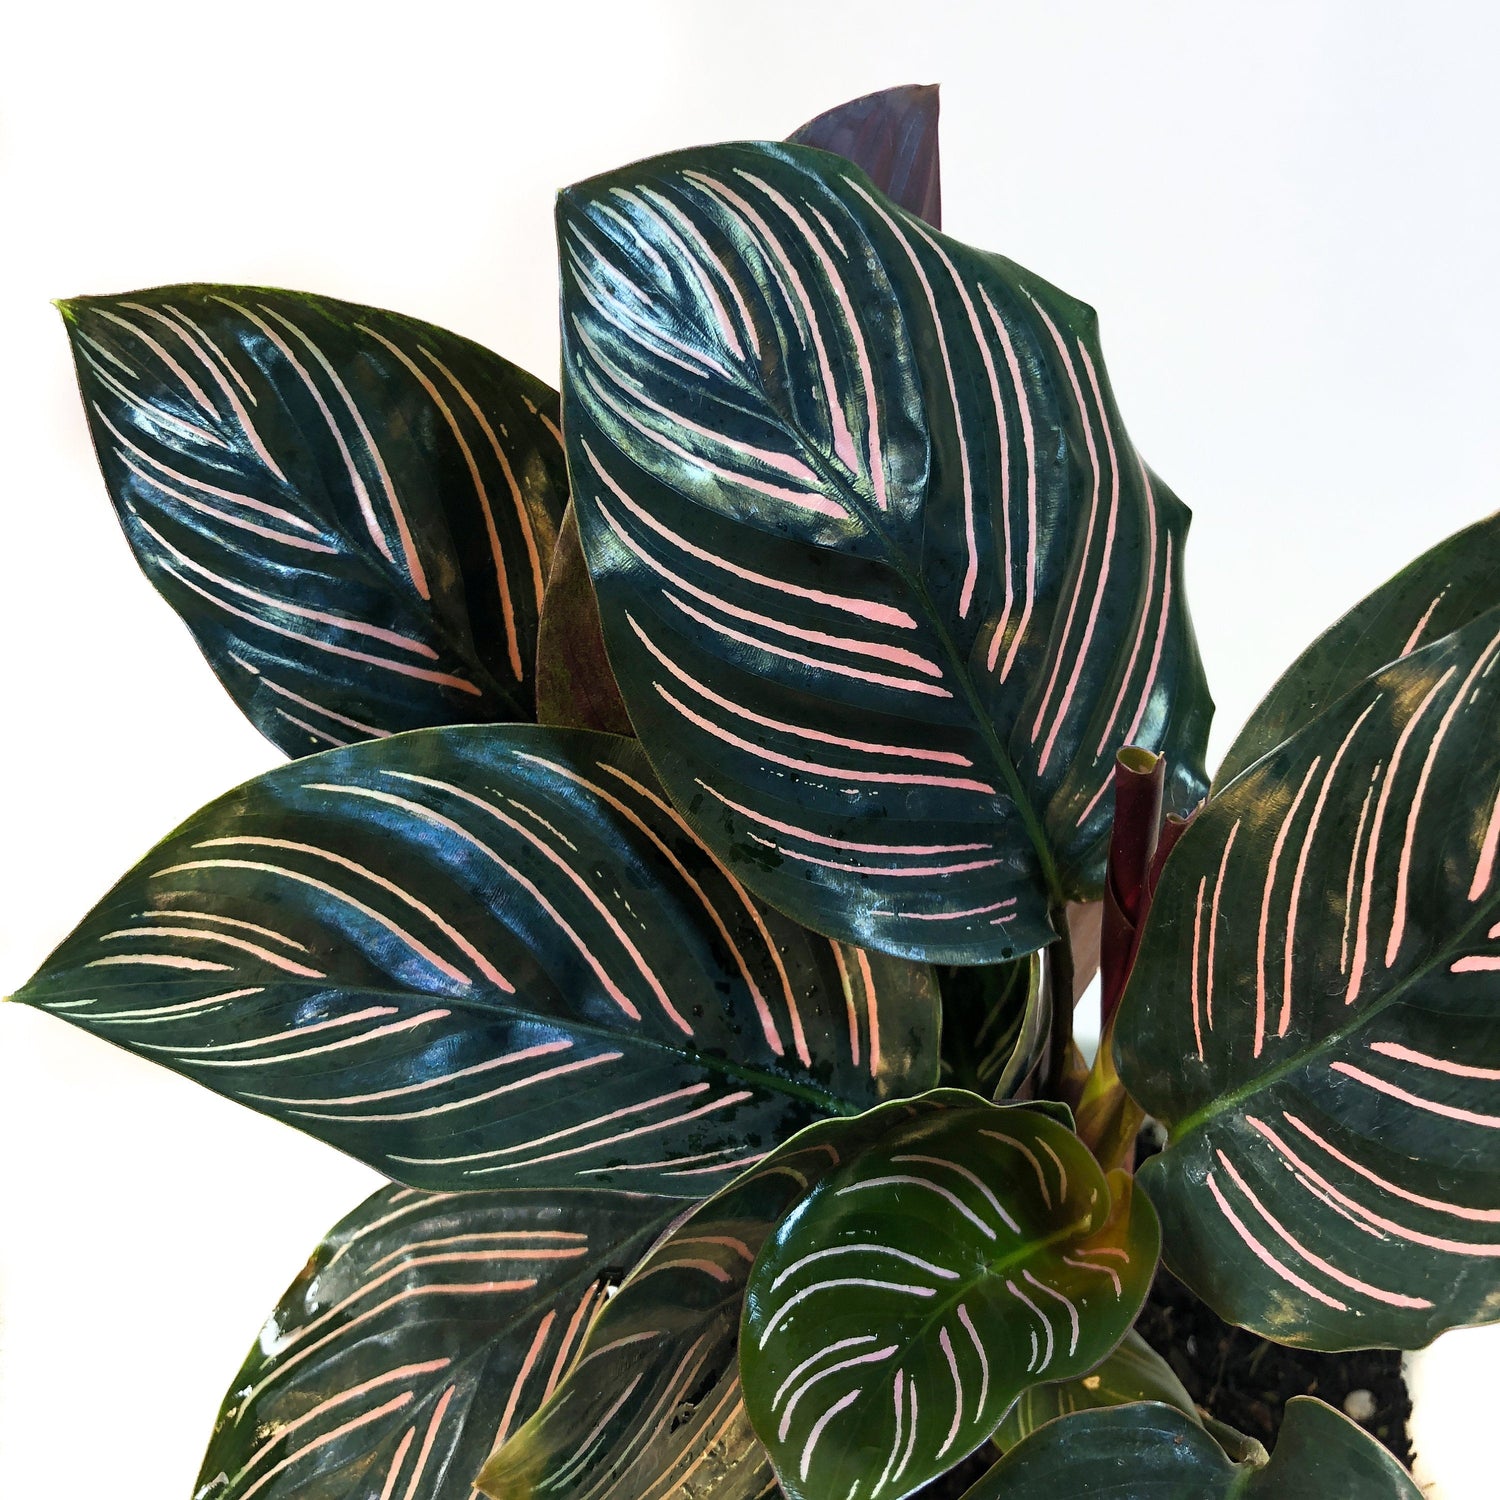 Pin Stripe Calathea - Live Plant in a 4 Inch Pot - Calathea Ornata - B –  Wekiva Foliage